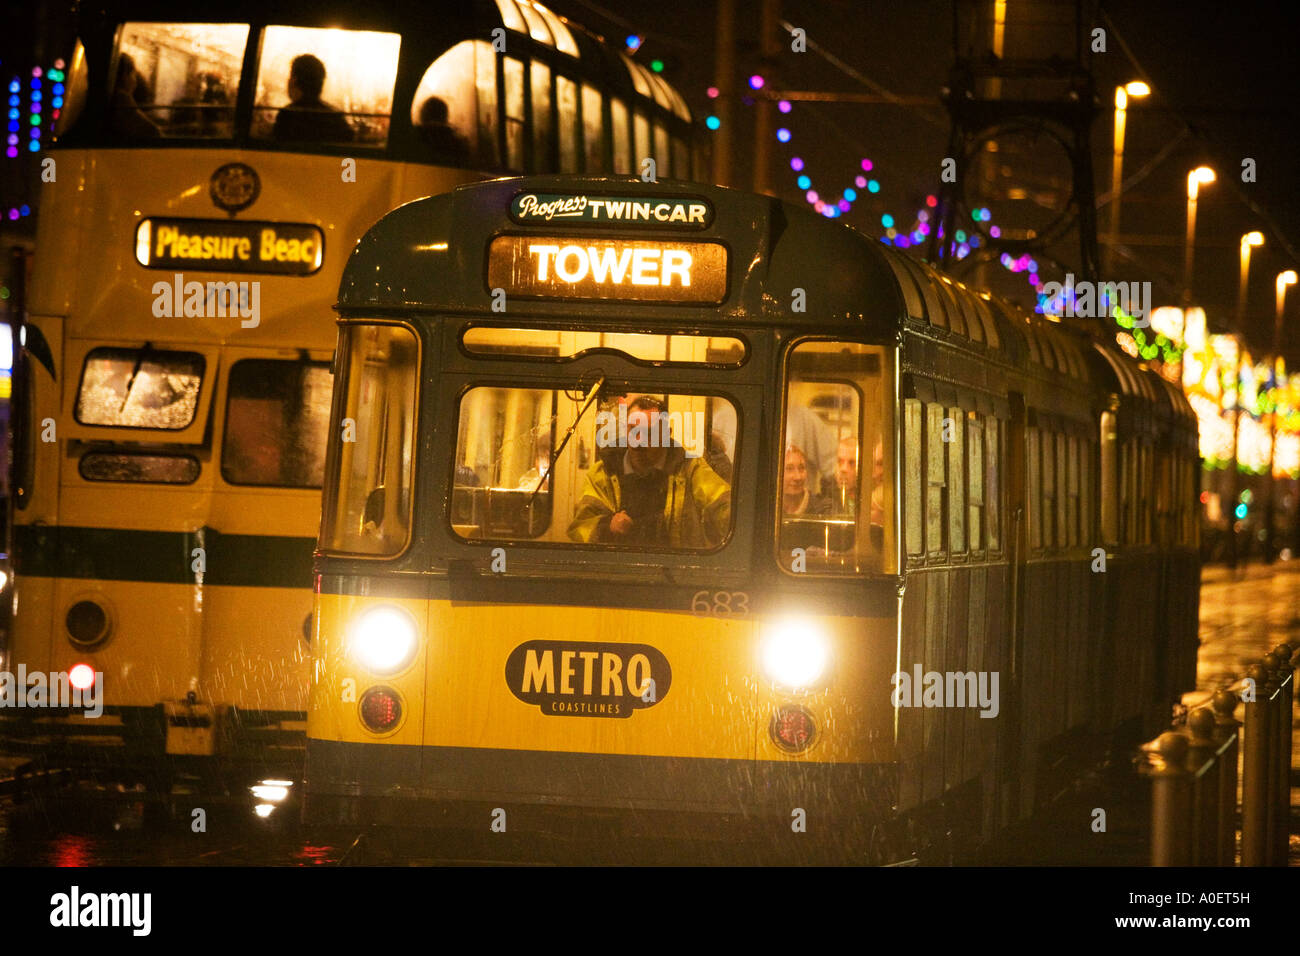 A traditional tram in rain at night at Blackpool seaside resort, UK. Stock Photo